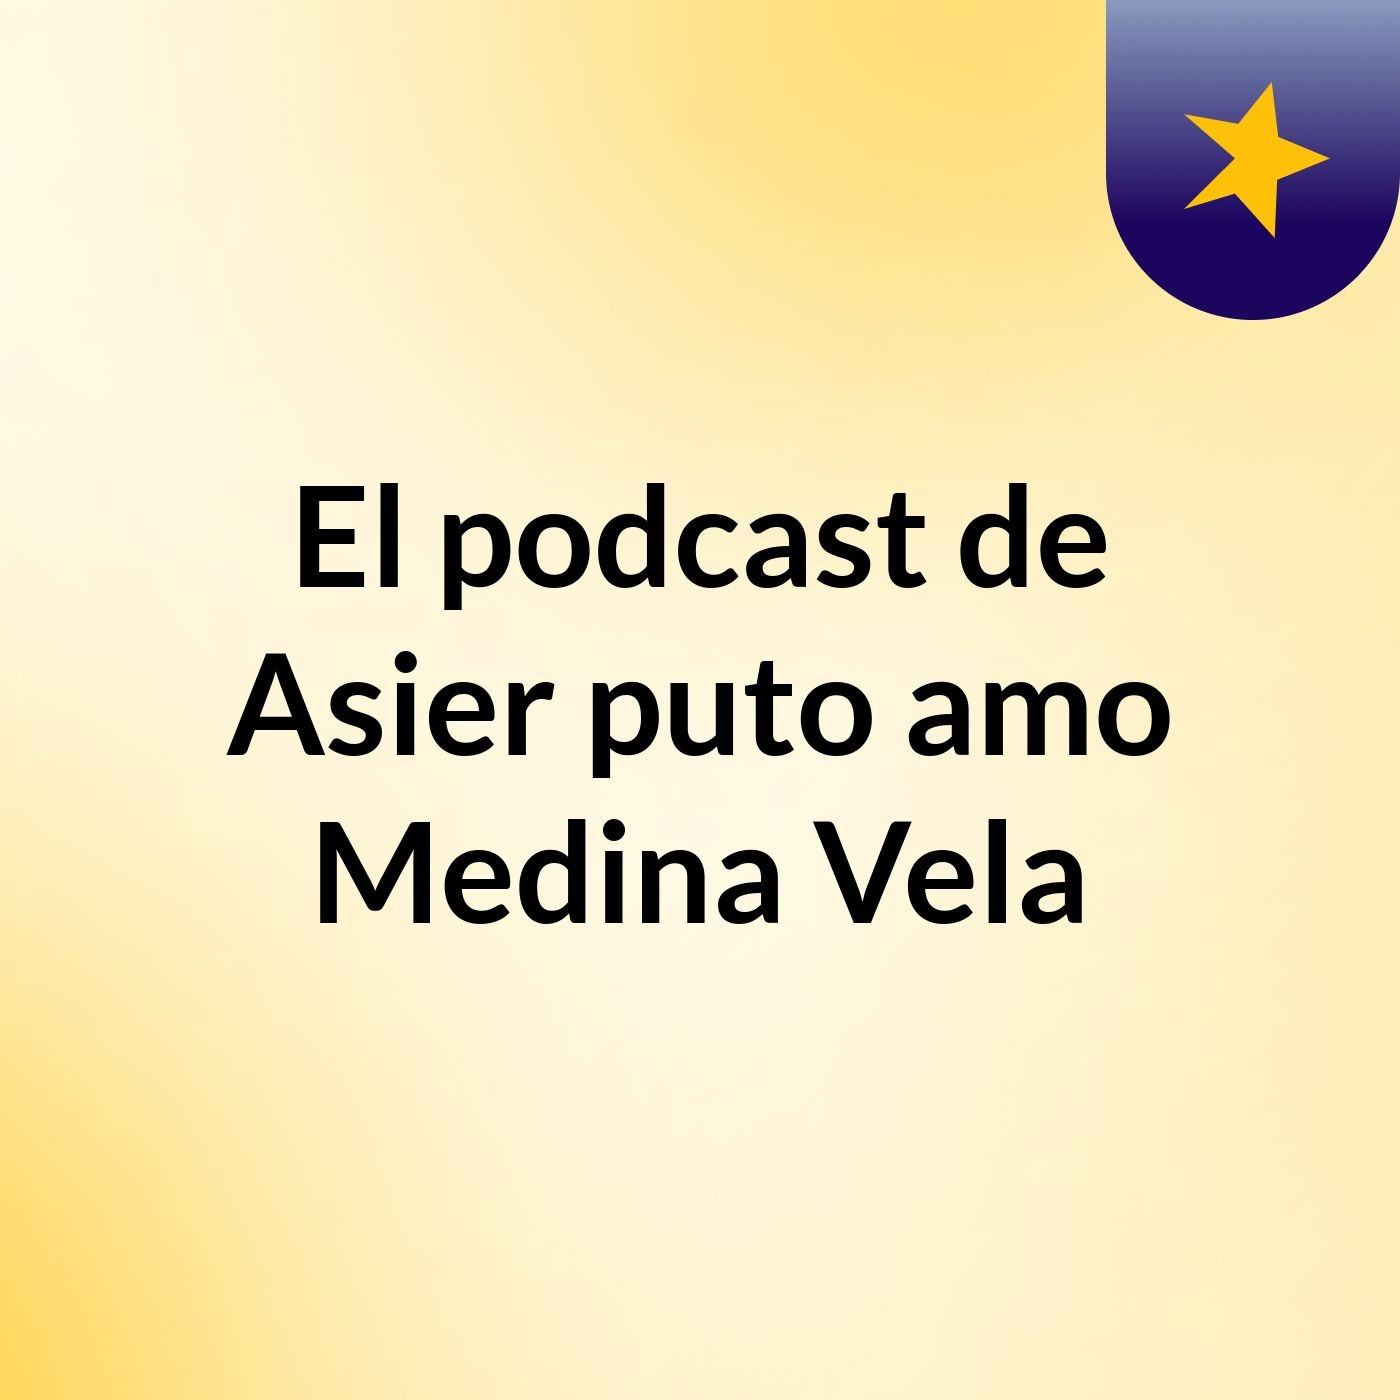 El podcast de Asier puto amo Medina Vela